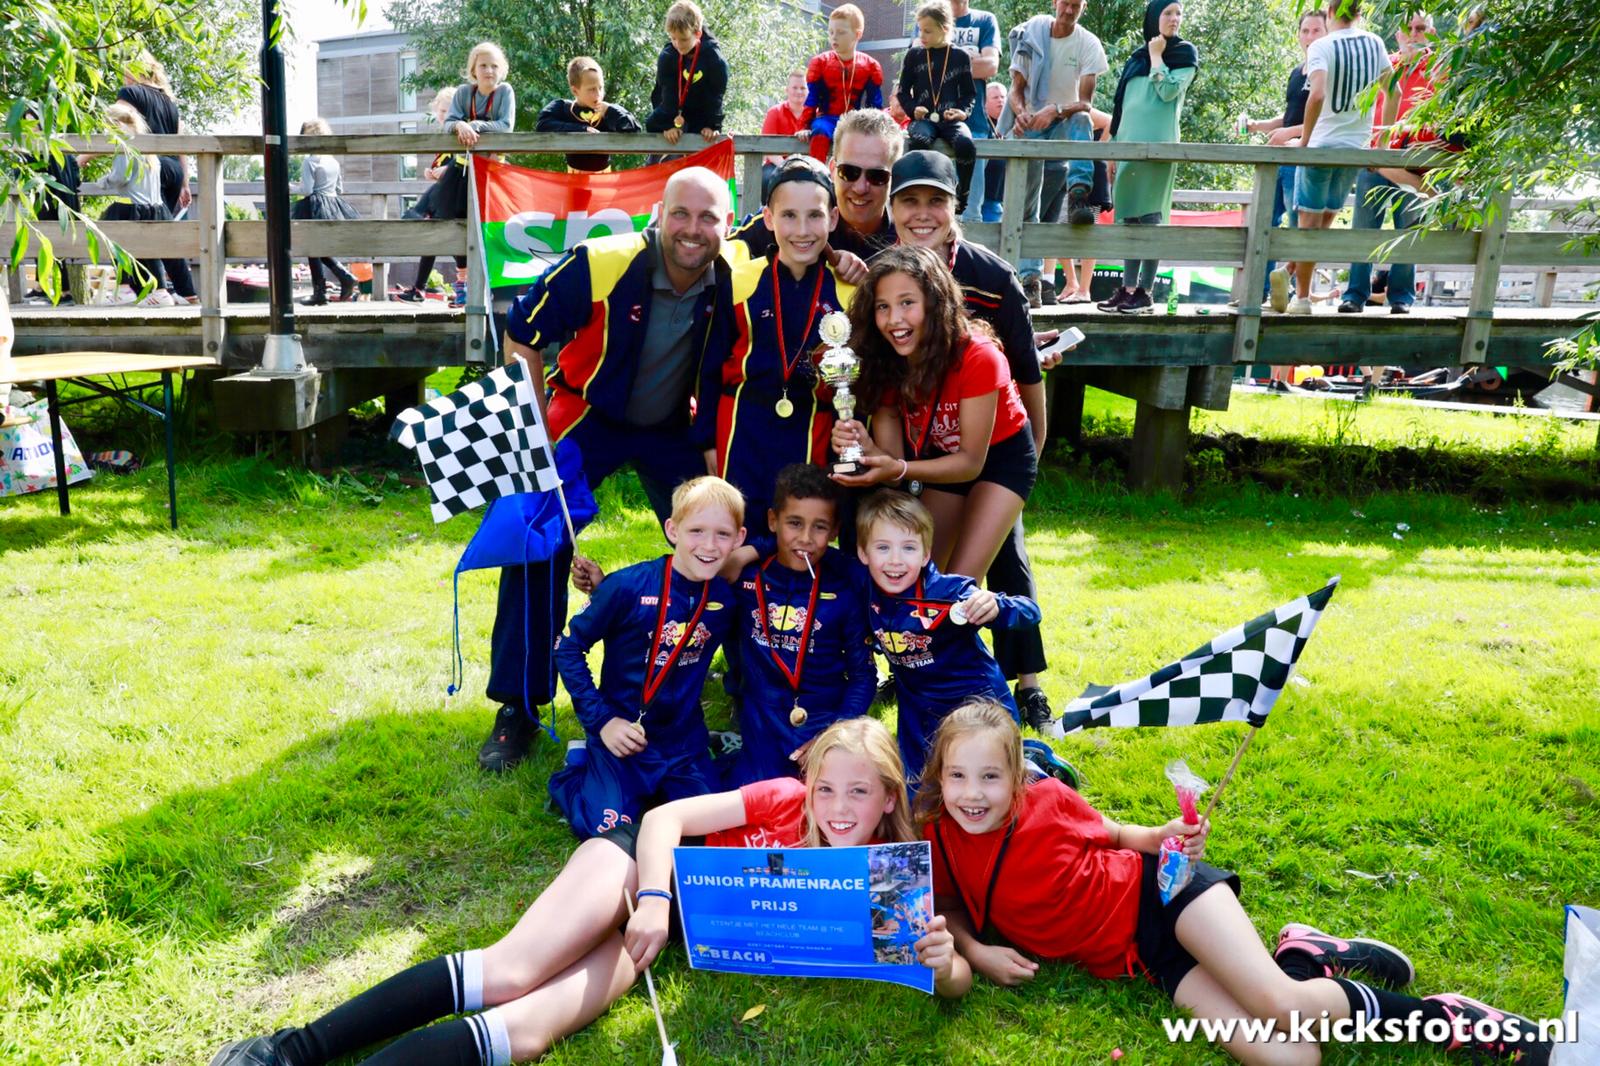 Junior Stenhuismaatjes wint Junior Pramenrace